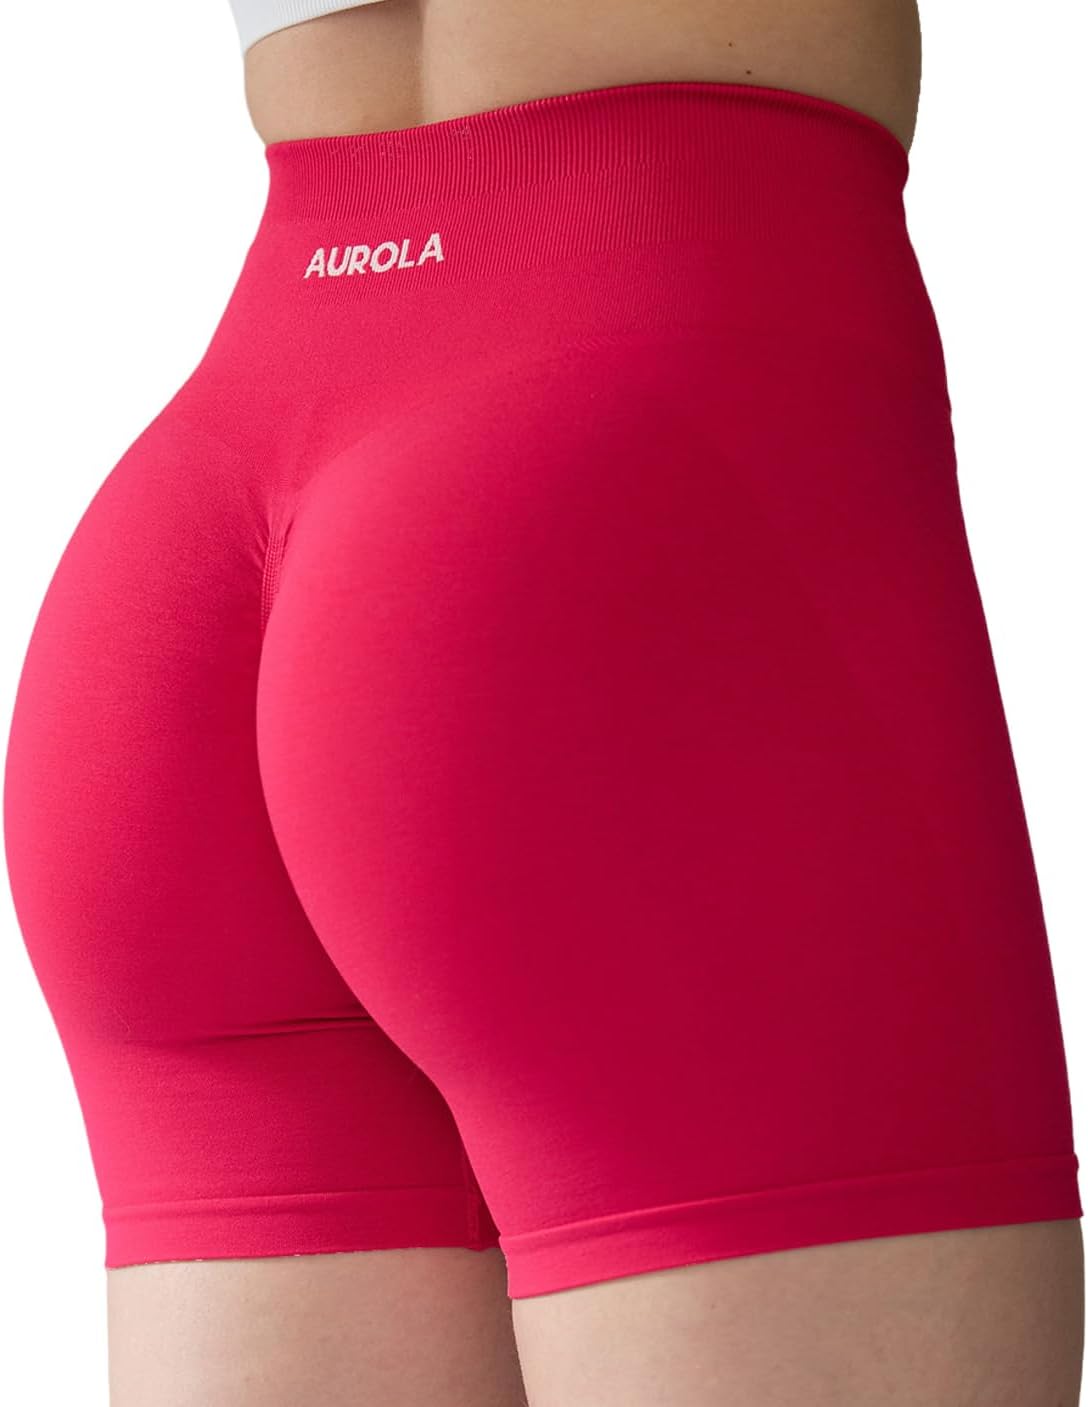 AUROLA Intensify Workout Shorts for Women Seamless Sri Lanka